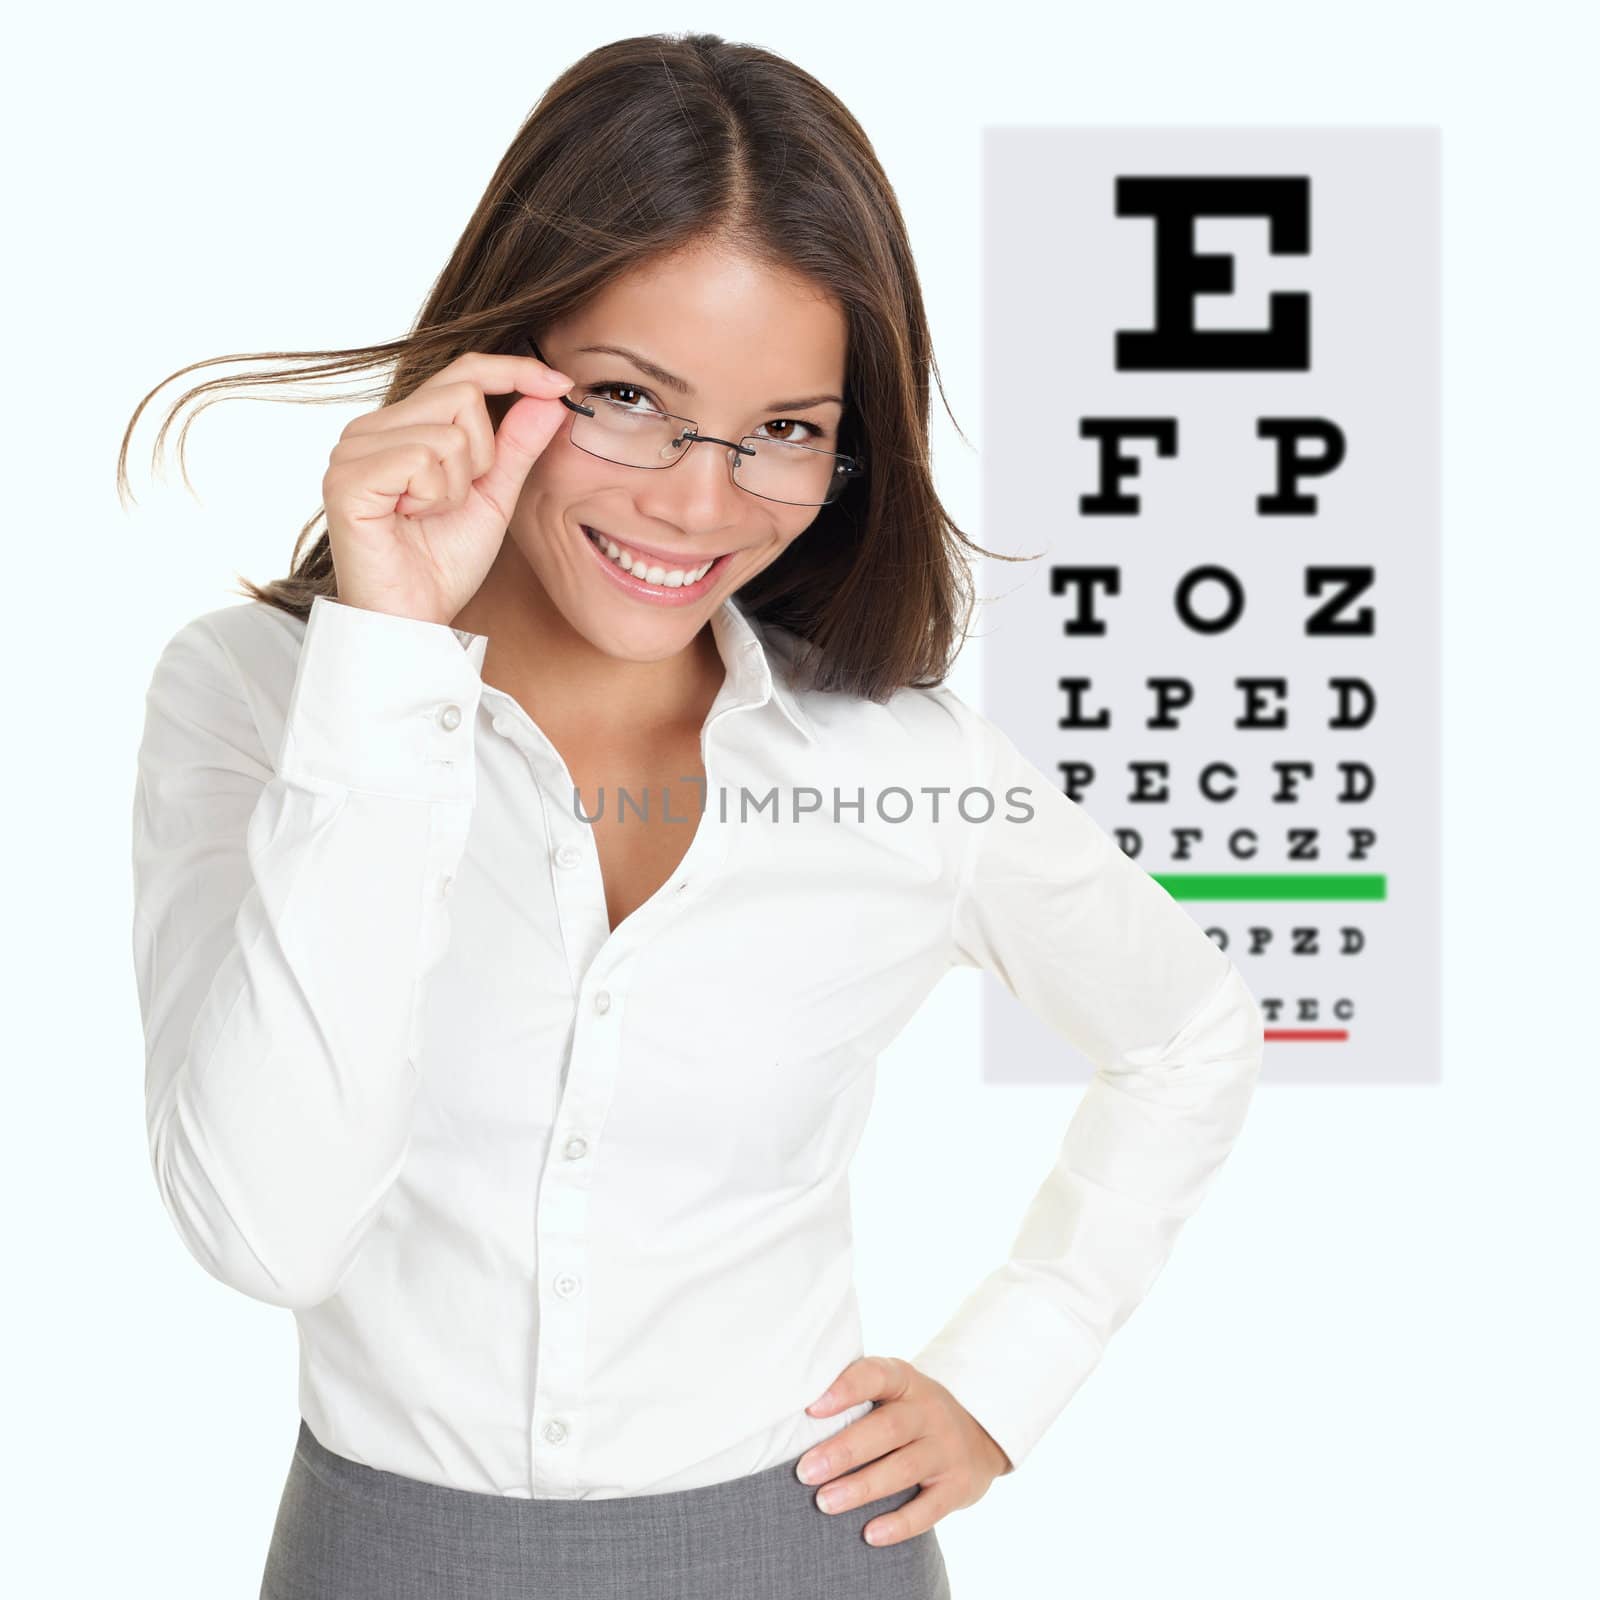 Optician or optometrist showing Snellen eye exam chart wearing eye wear glasses. Female mixed race Caucasian / Asian Chinese model